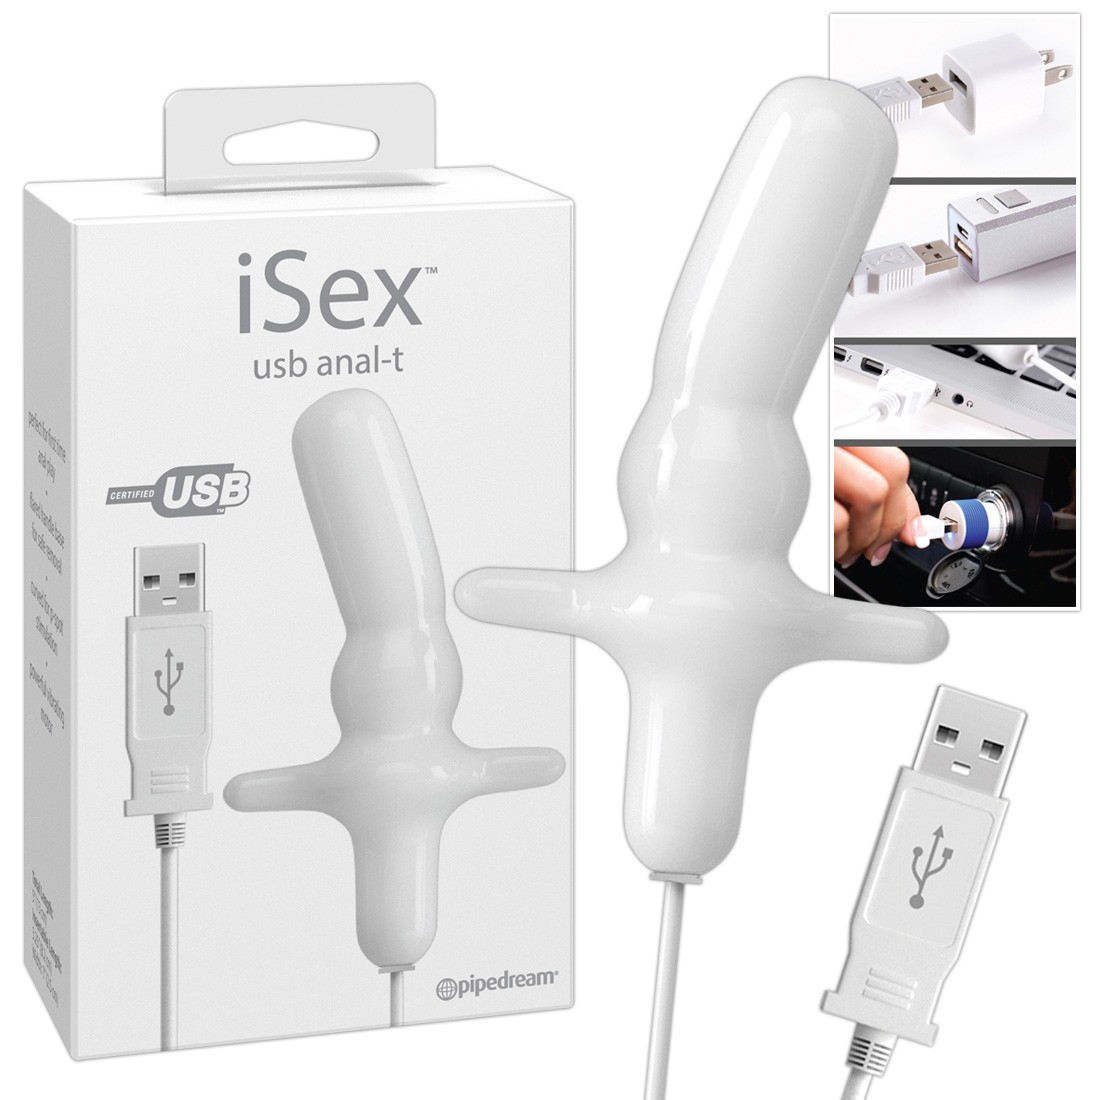  iSex  -  iSex  Anal  T  -  Analvibrator 